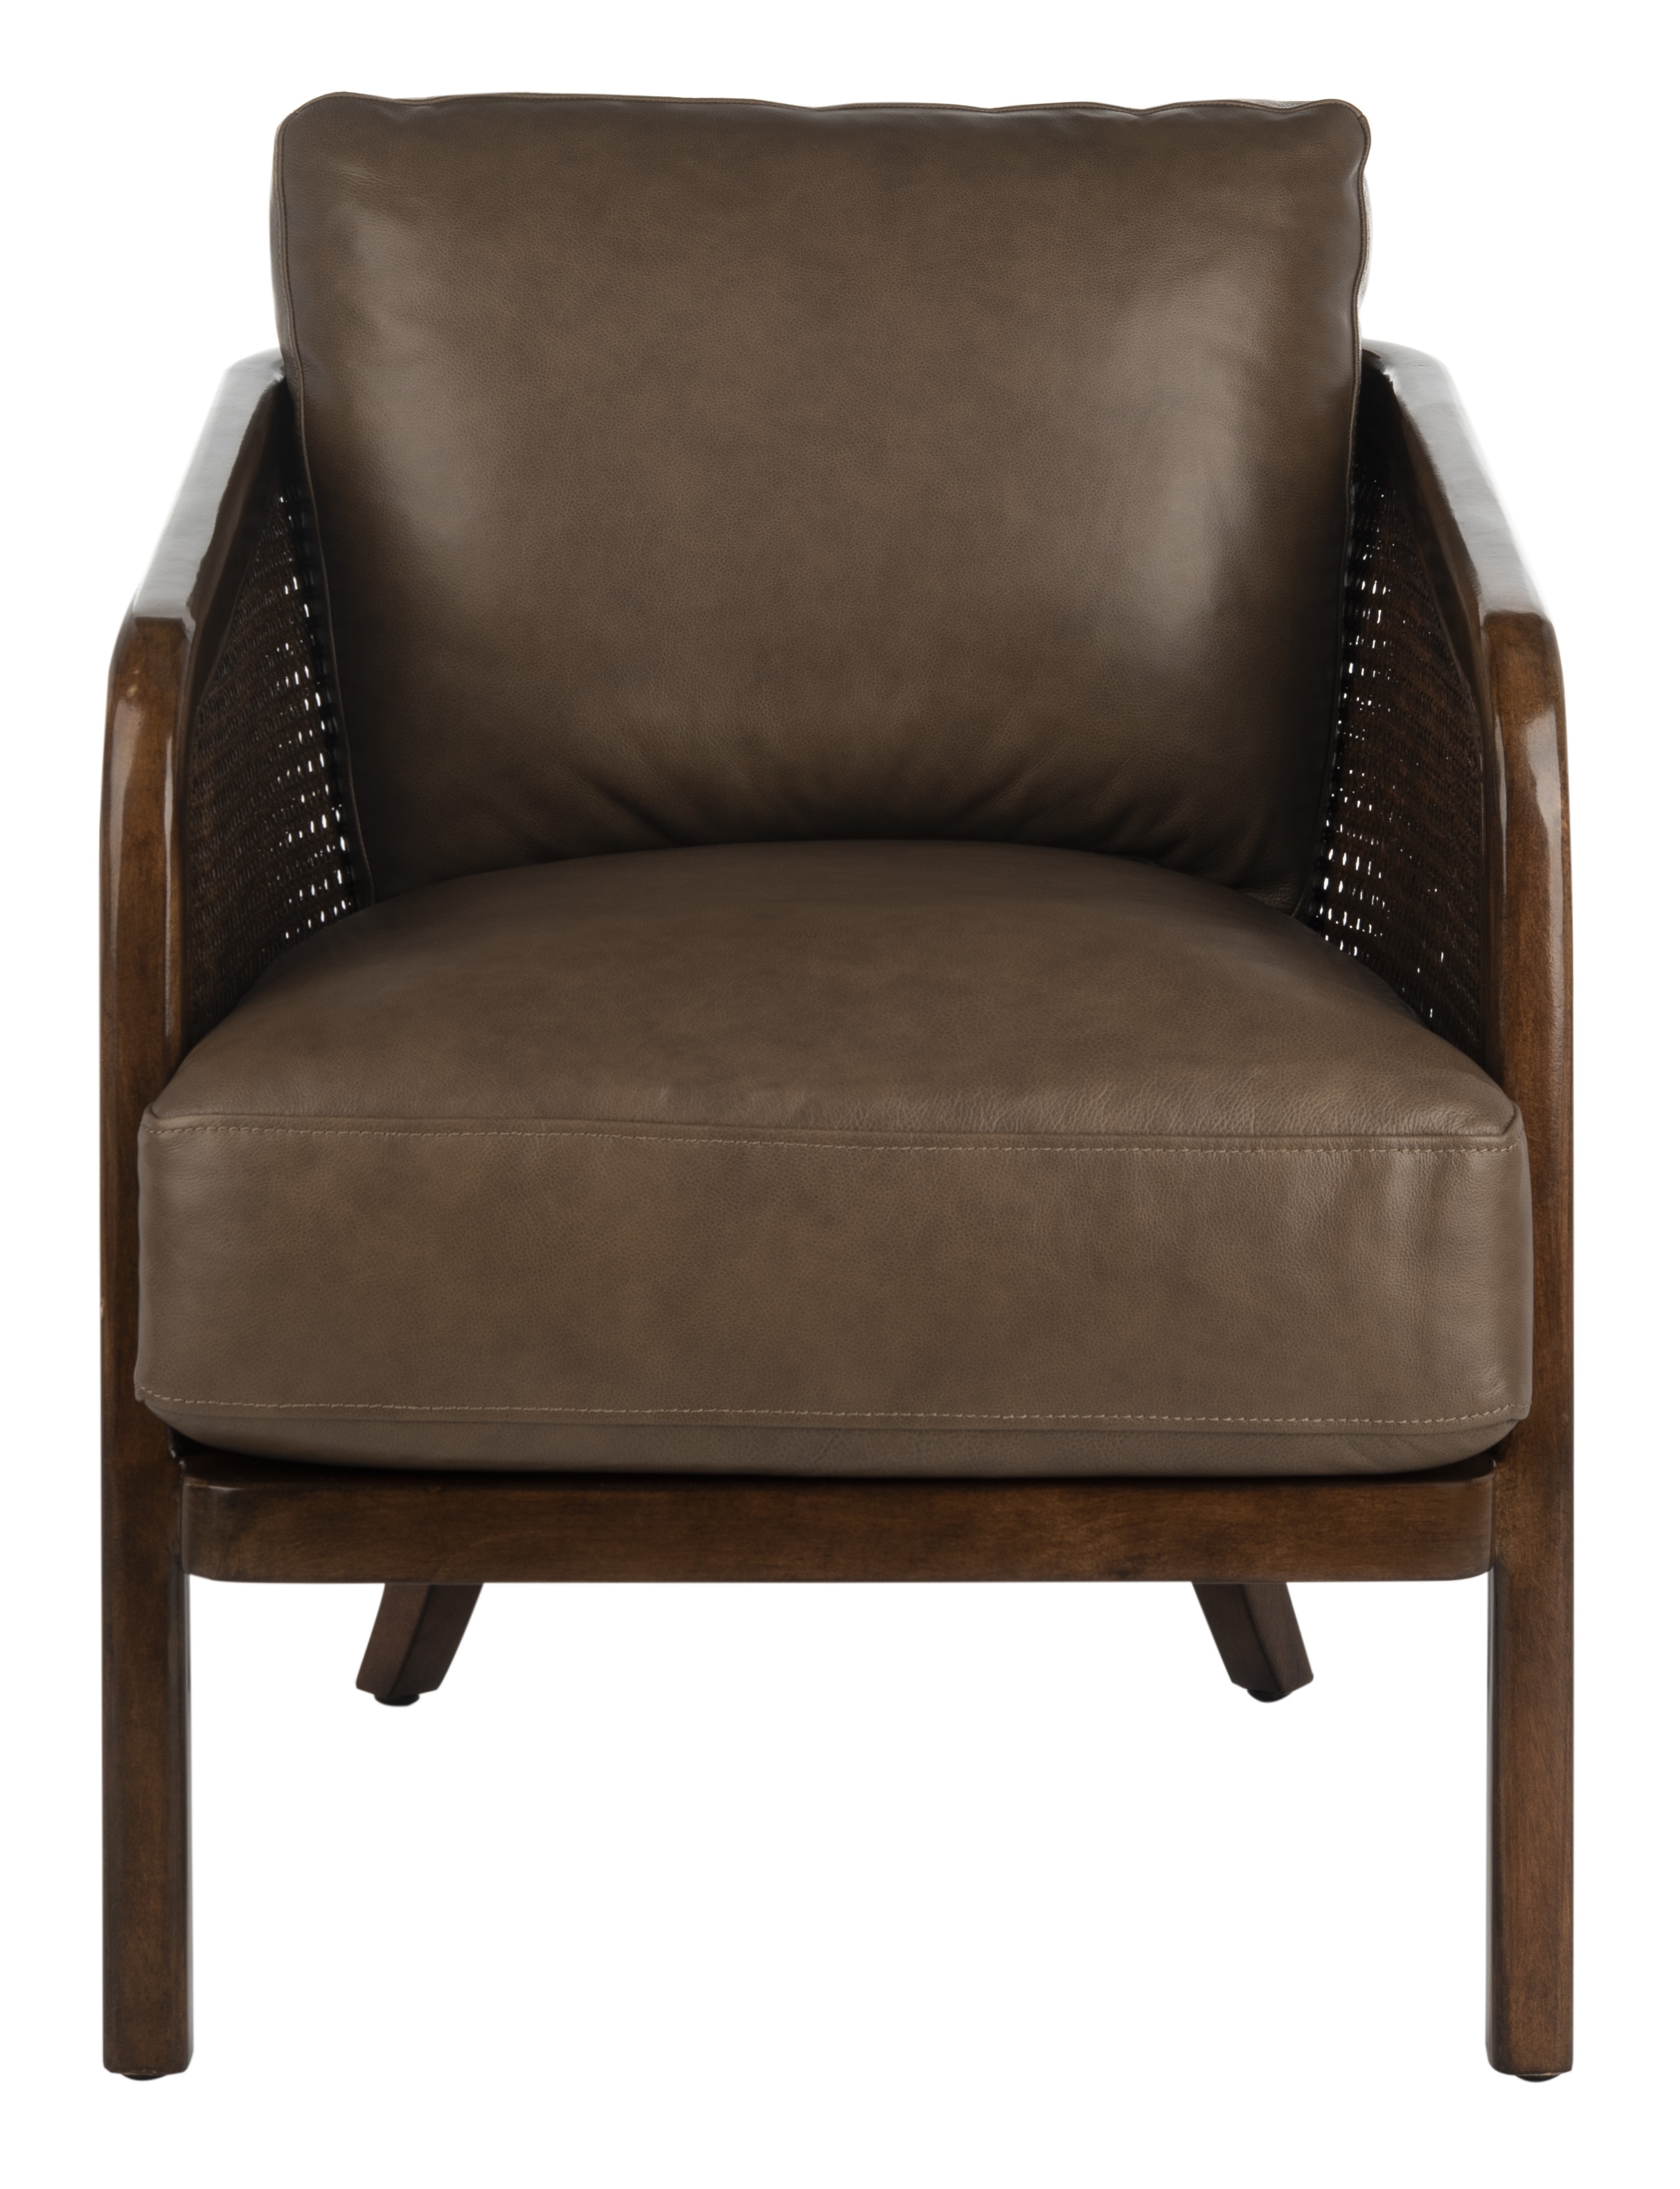 Caruso Barrel Back Chair - Dark Brown - Arlo Home - Image 1